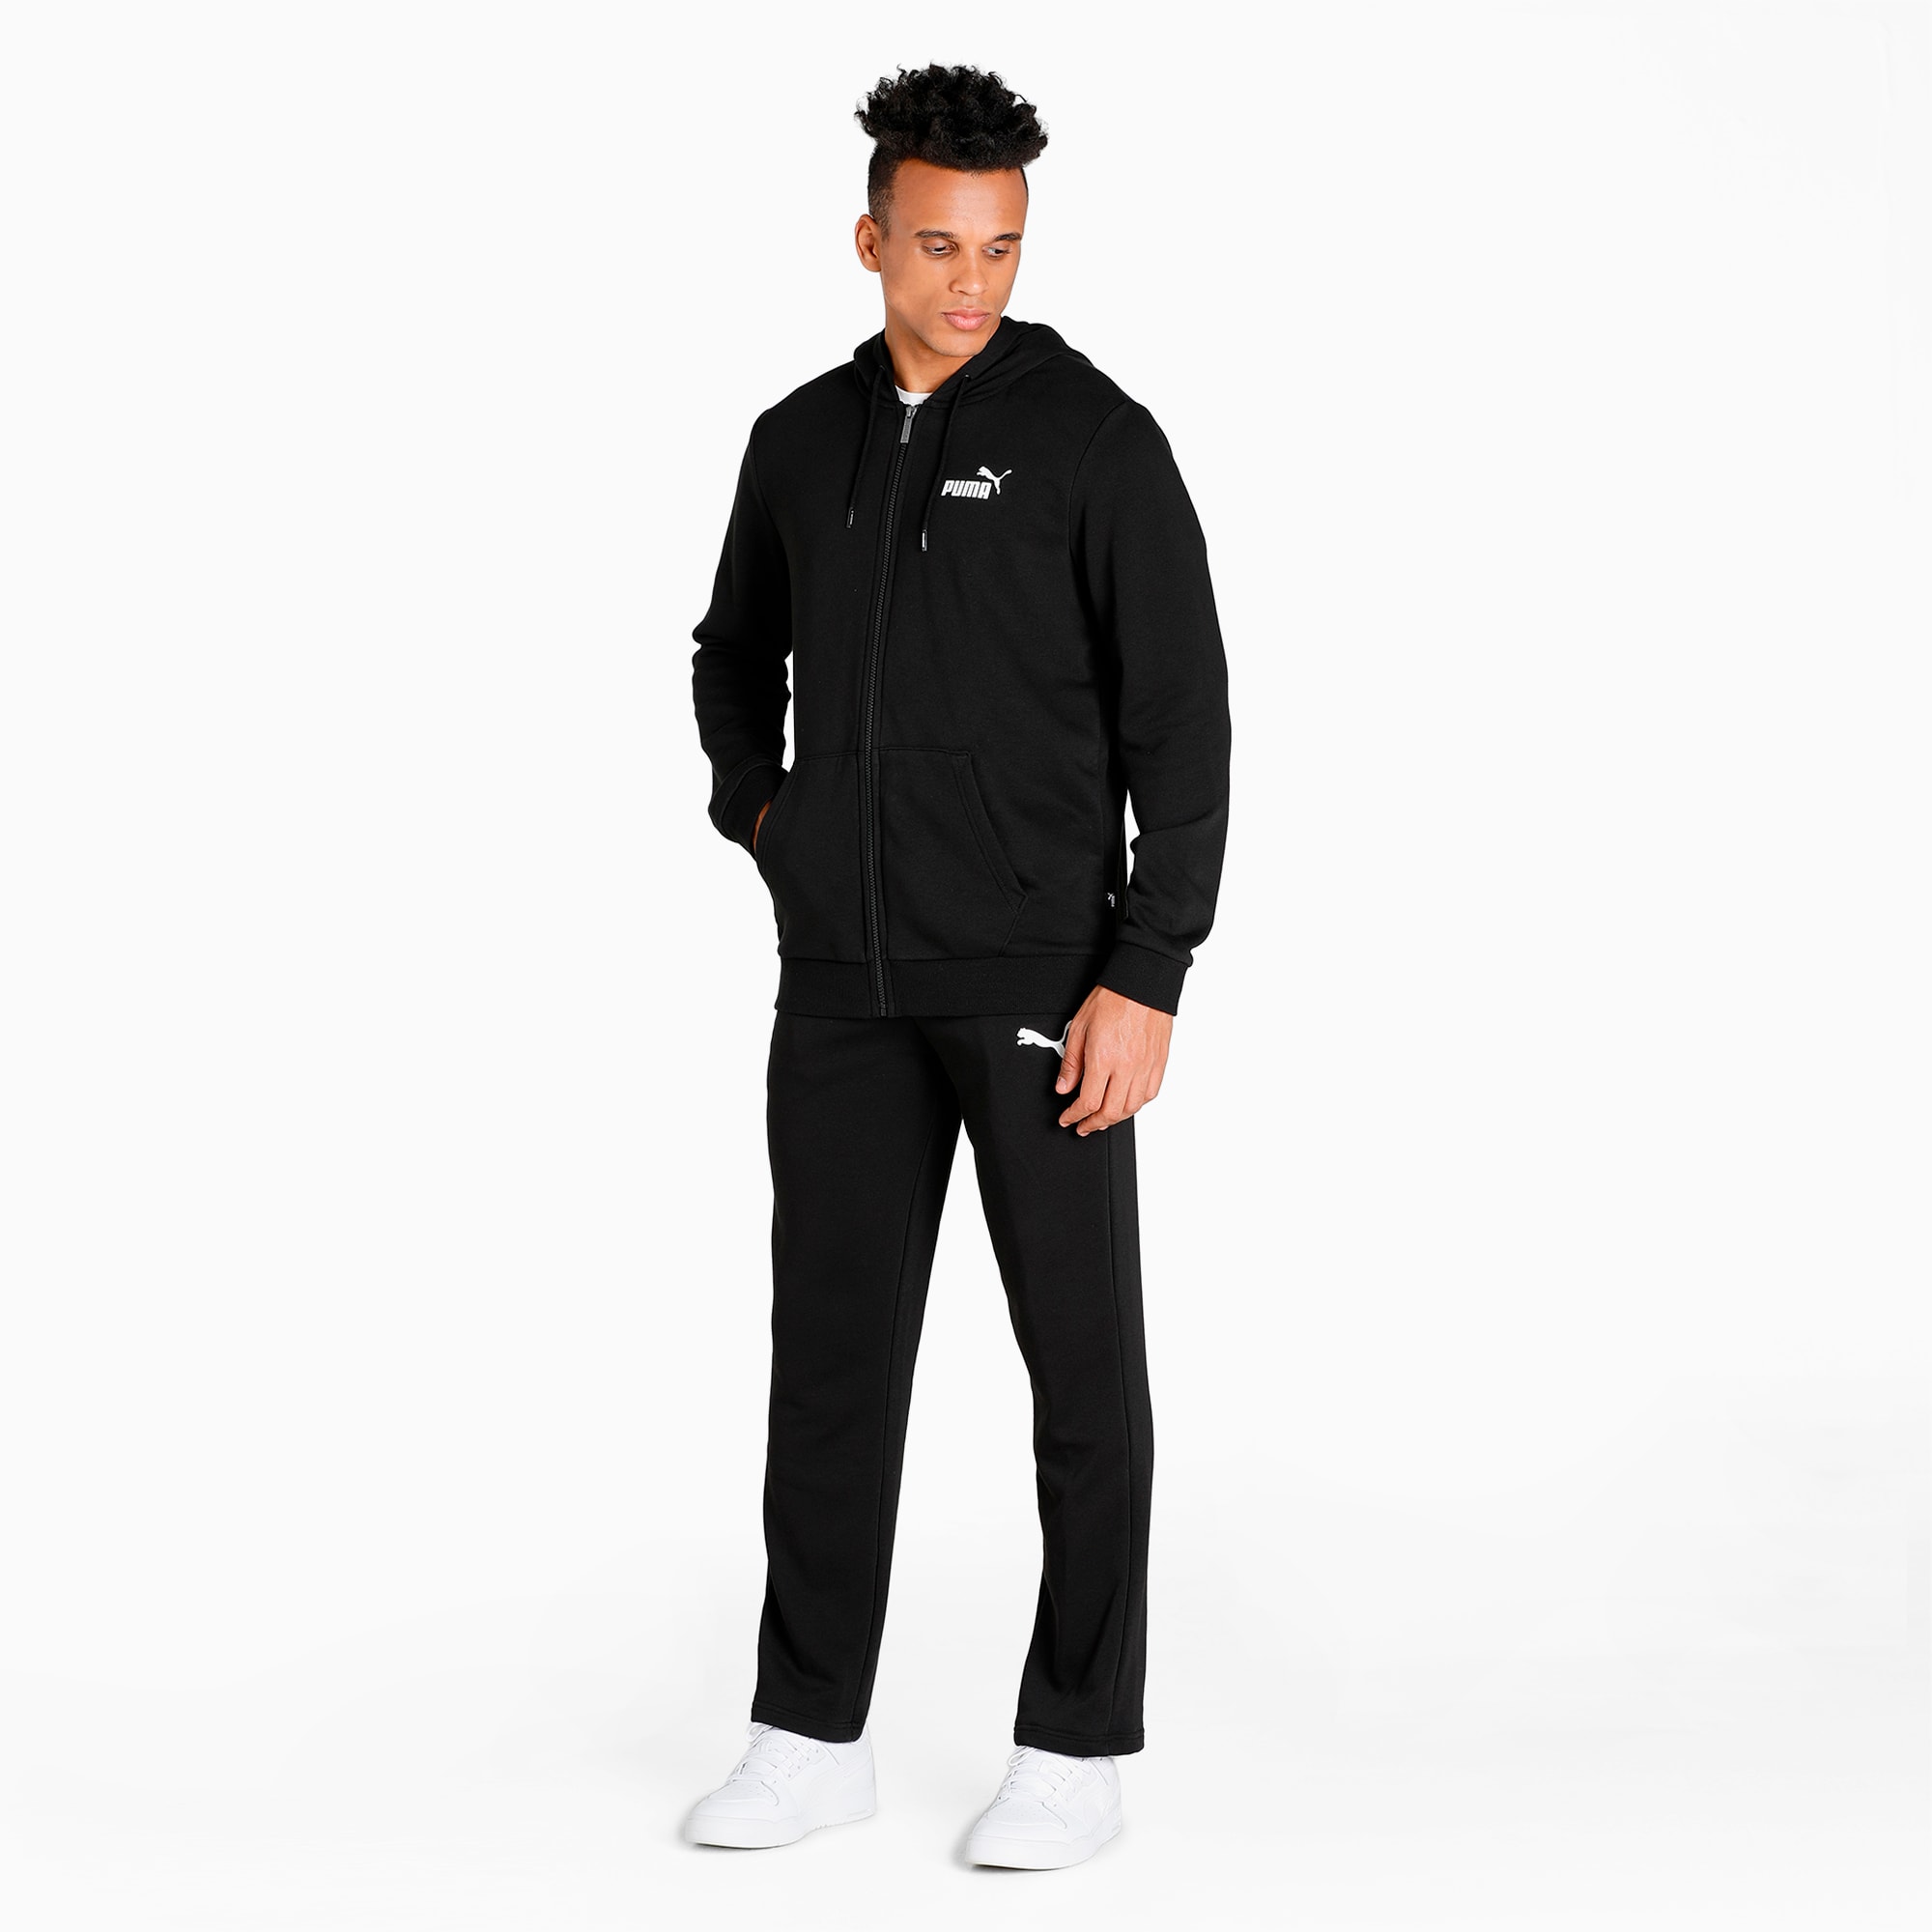 PUMA Essentials Logo Men's Sweatpants, Black, Size S, Clothing